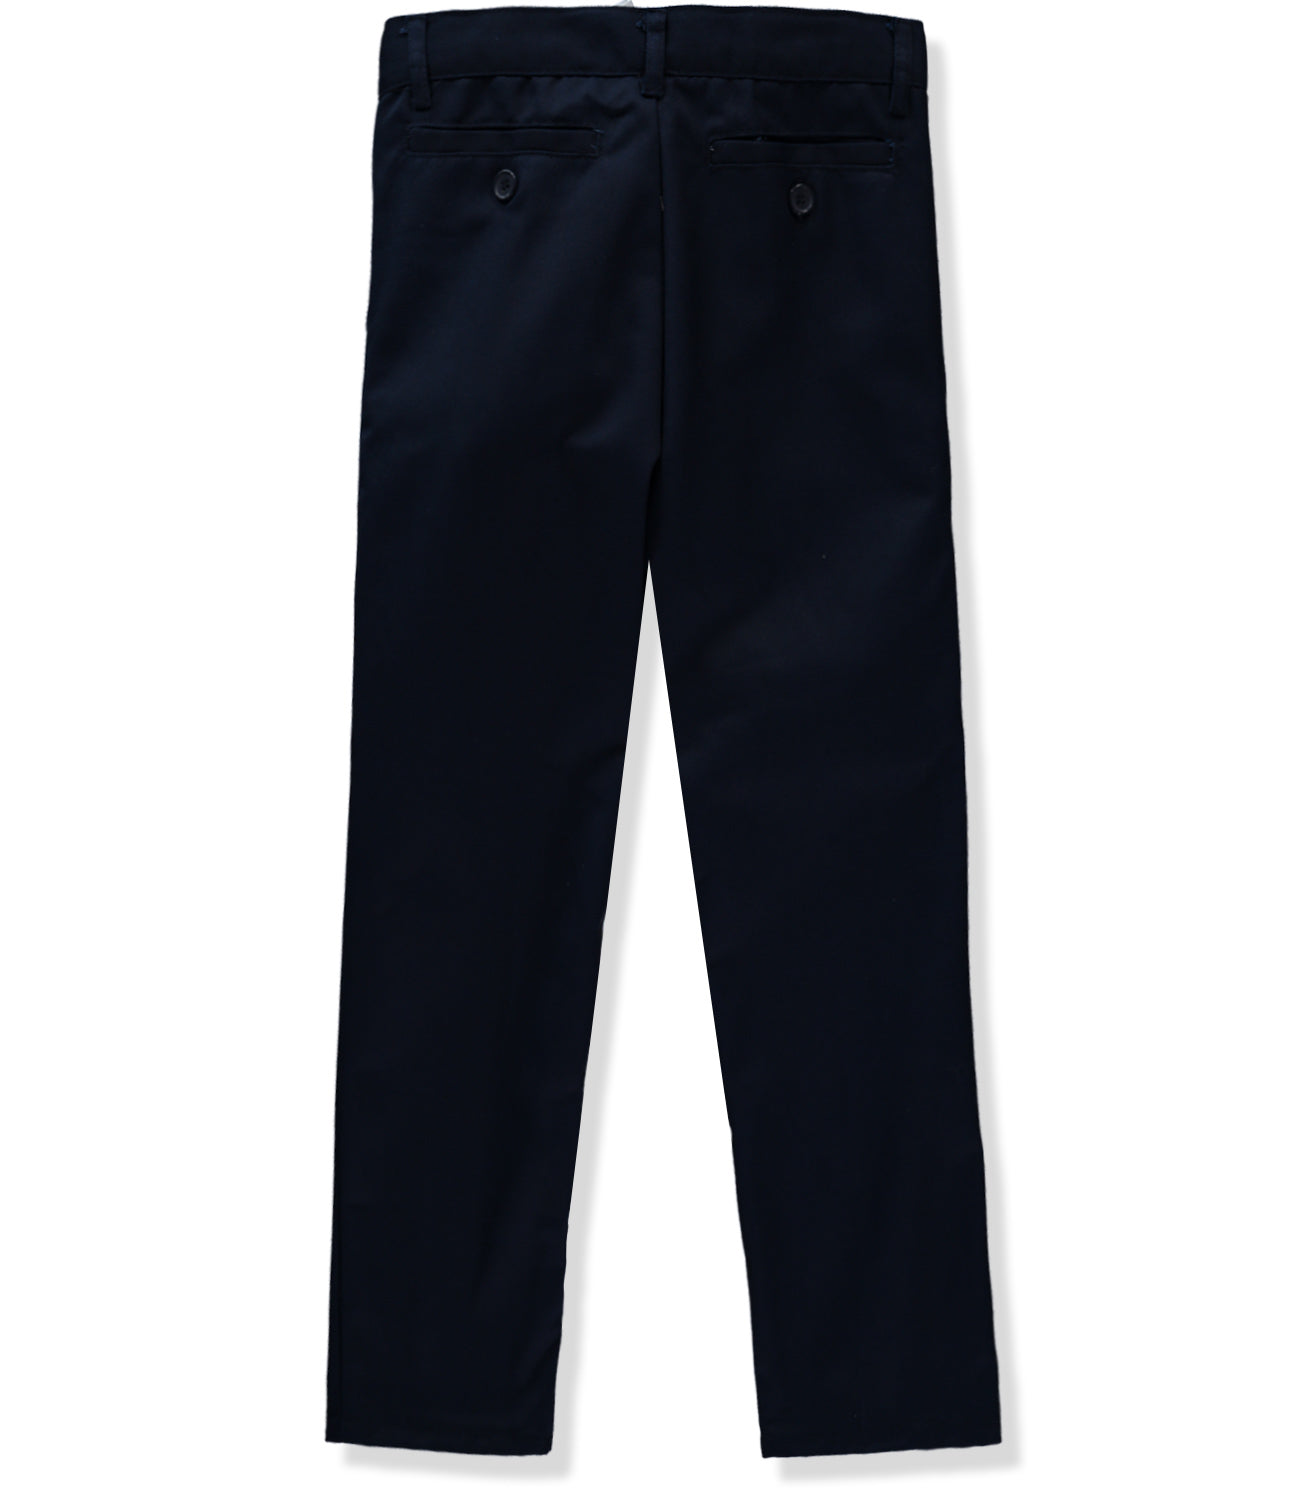 Galaxy Boys 8-20 Flat Front School Uniform Pants